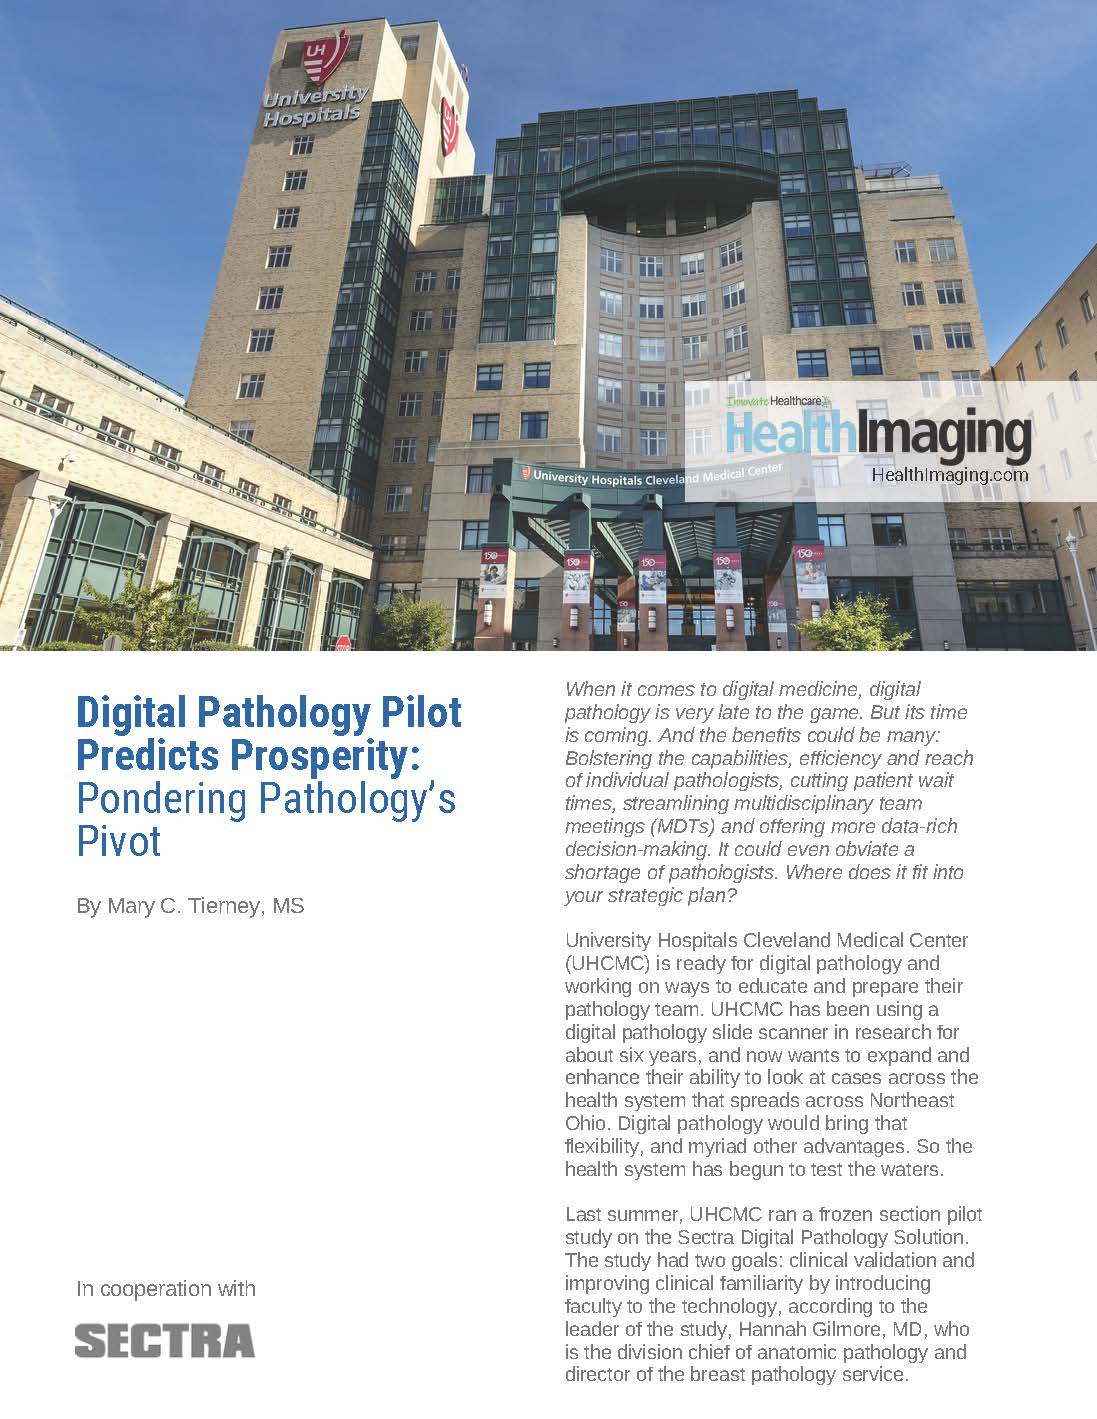 Digital Pathology Pilot Predicts Prosperity - Reprint_Page_1